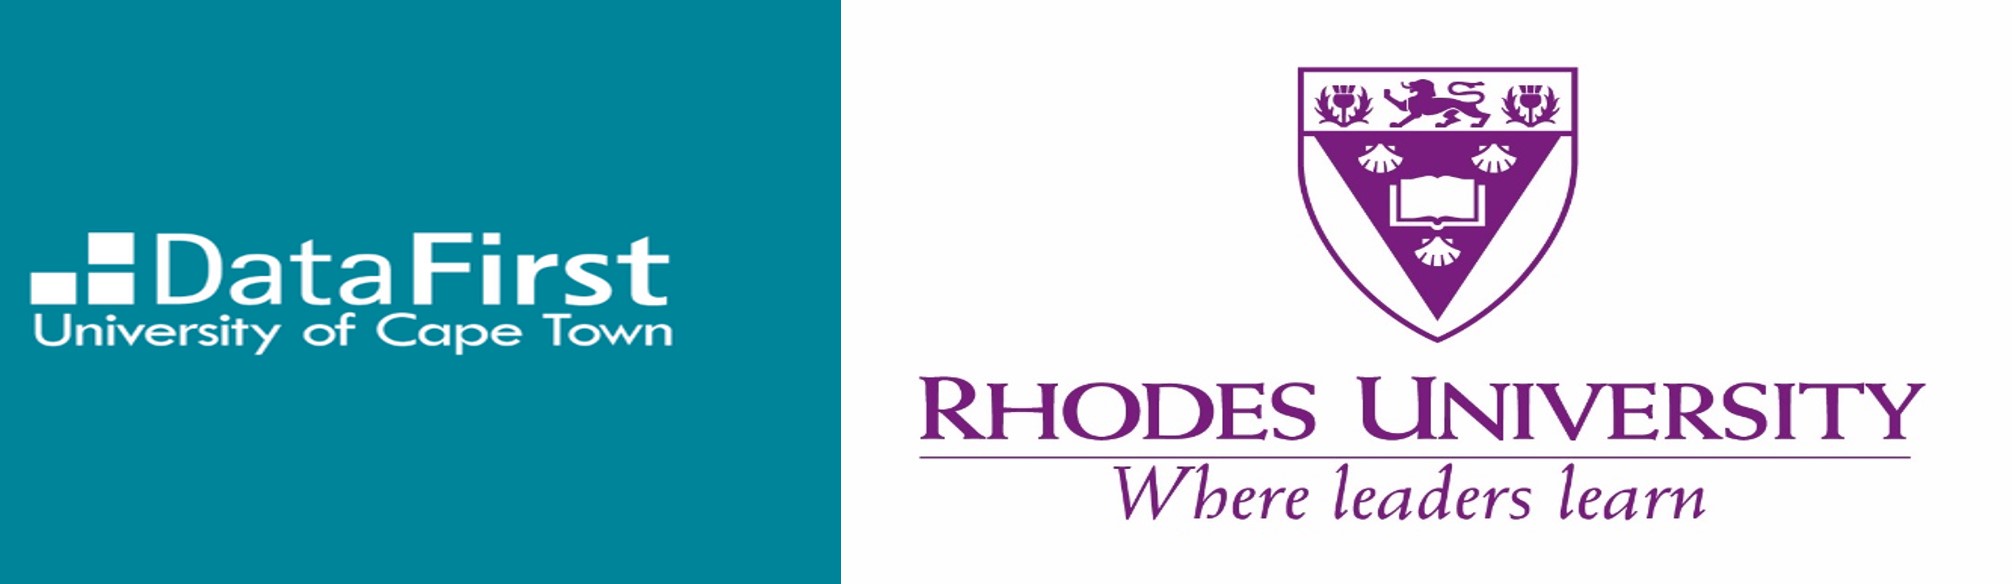 DataFirst & Rhodes Univeristy